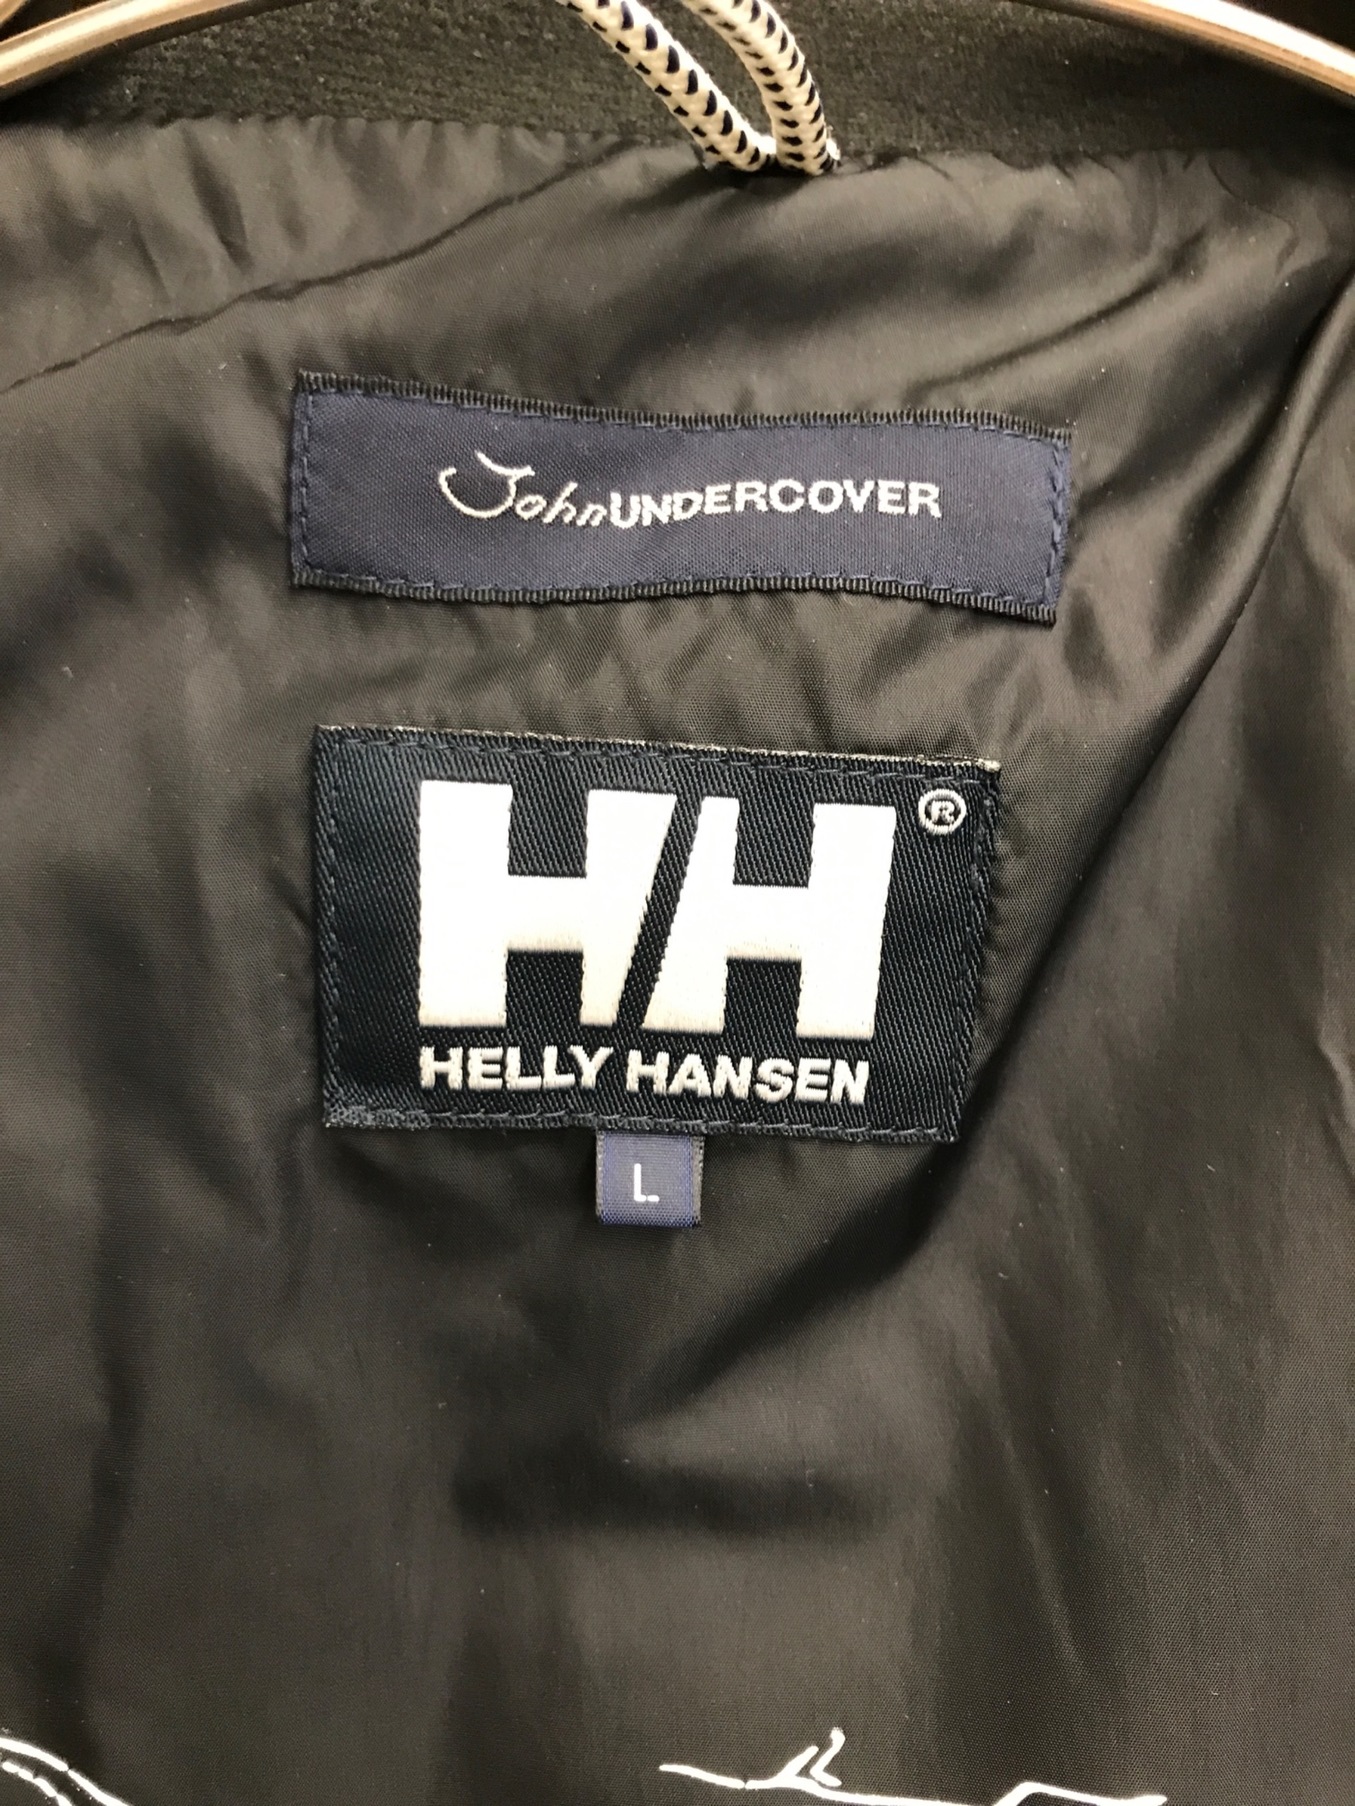 HELLY HANSEN JohnUNDERCOVER - pmp-aparts.com